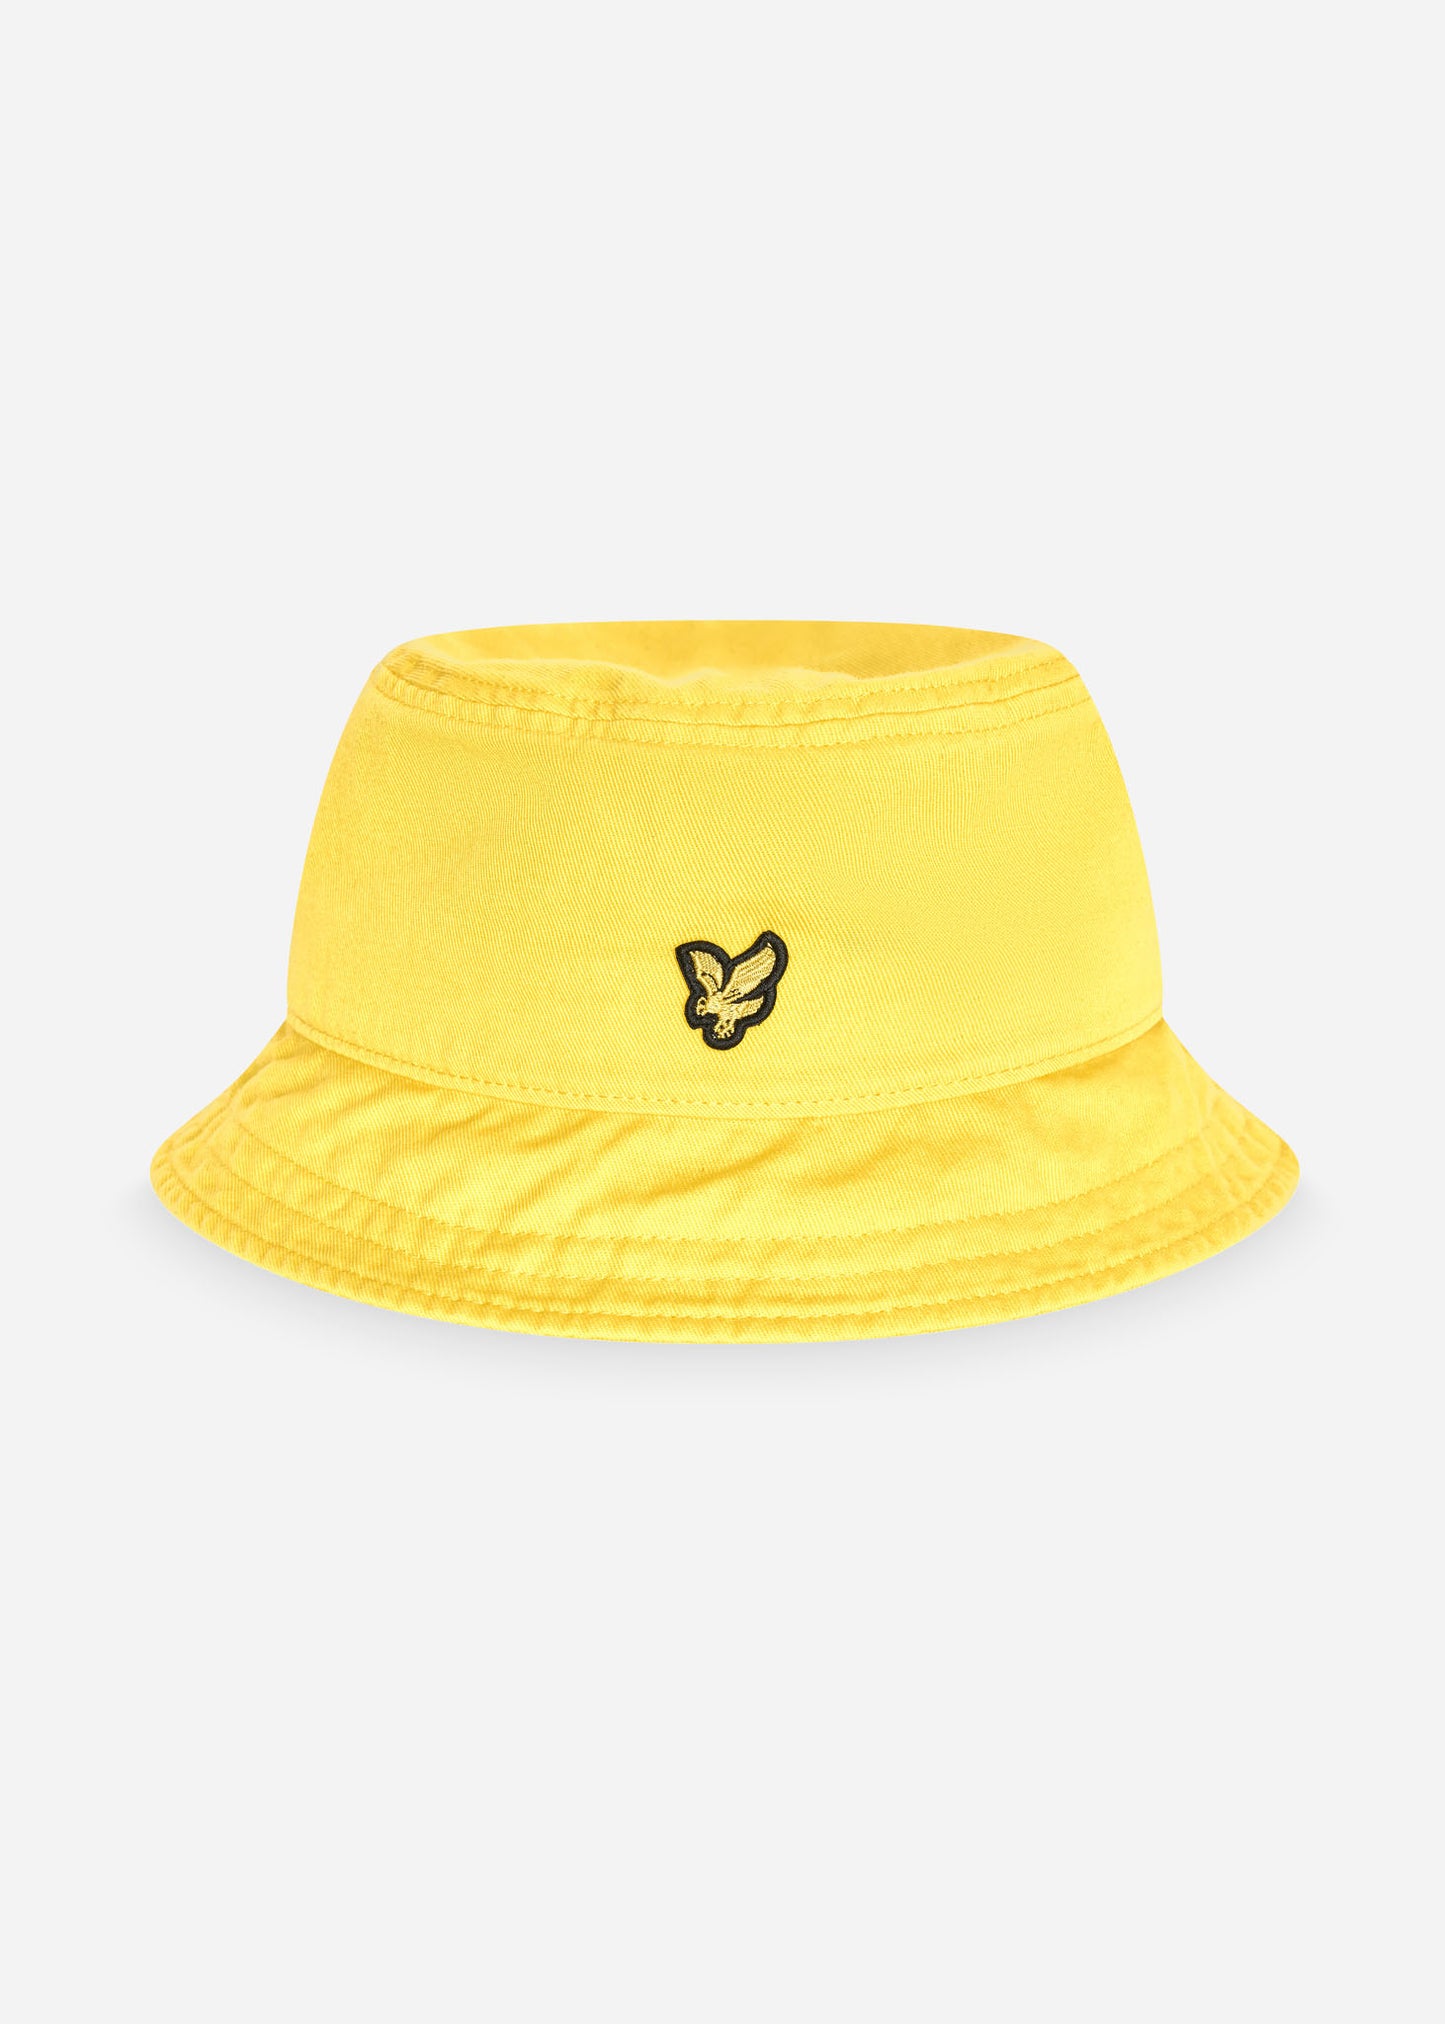 Lyle & Scott Bucket Hats  Cotton twill bucket hat - sunshine yellow 